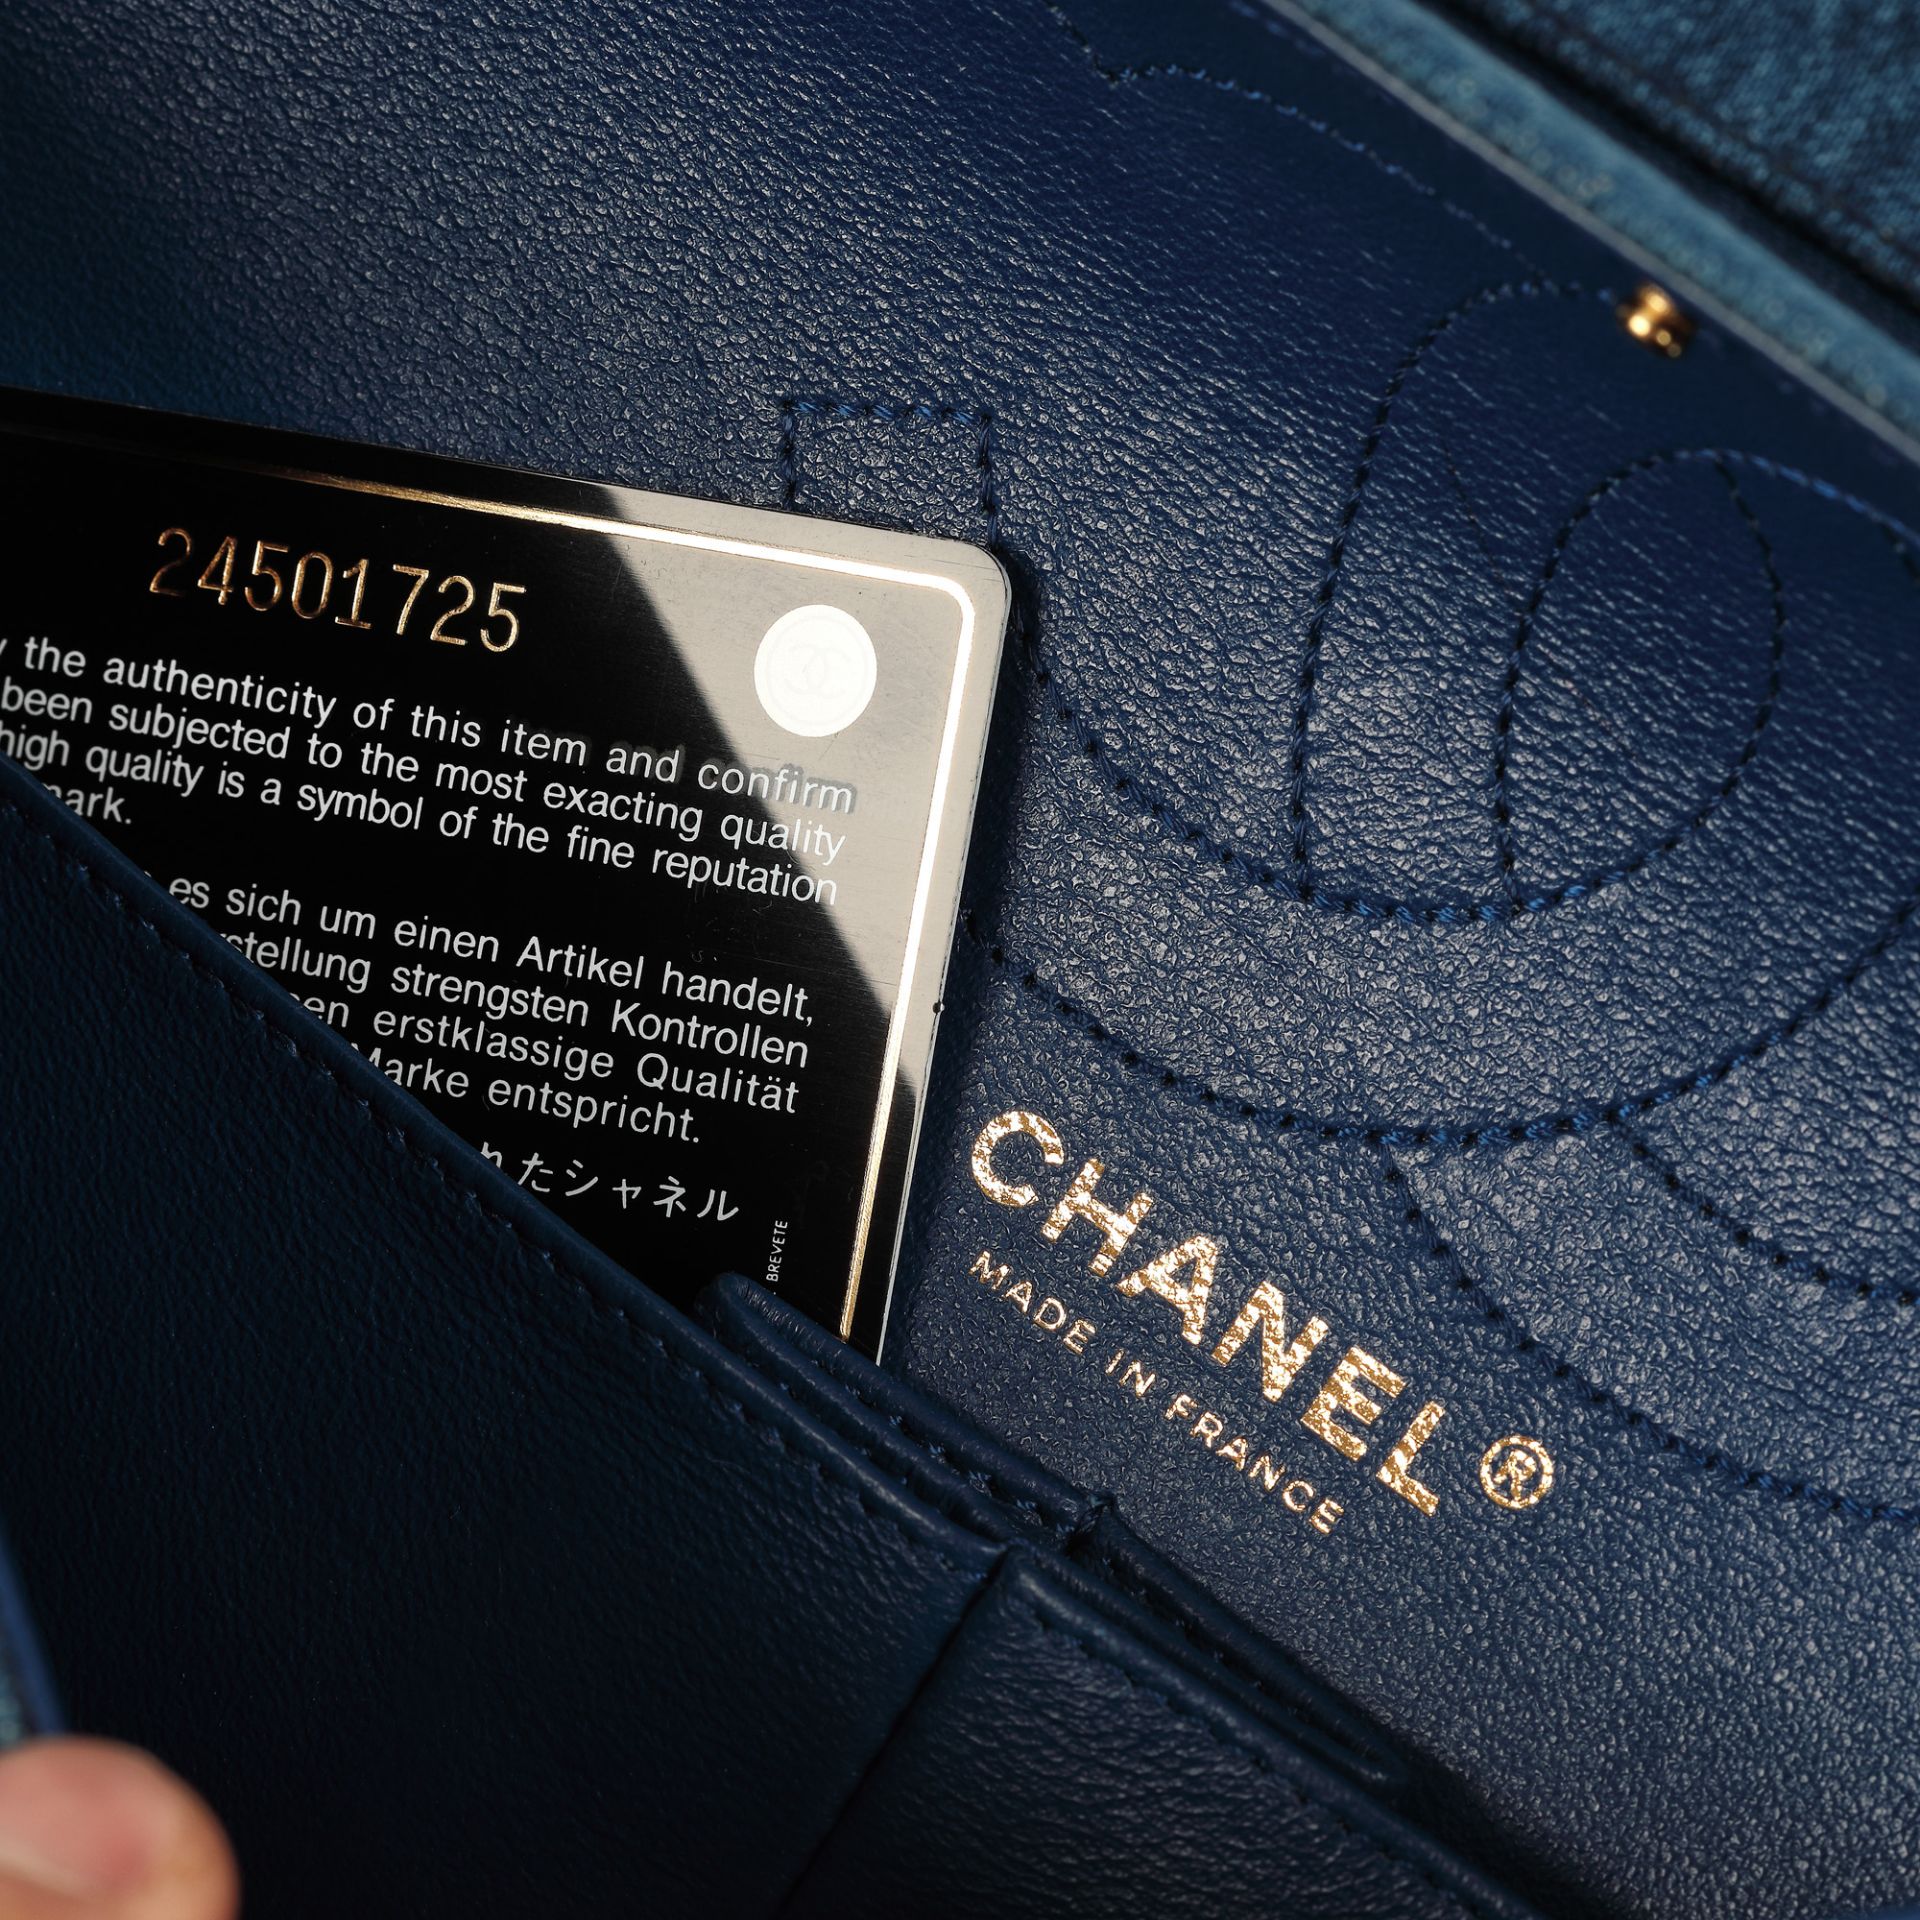 "Reissue 2.55 Flap Bag" - Chanel bag, denim, authenticity card and original cover - Image 3 of 5